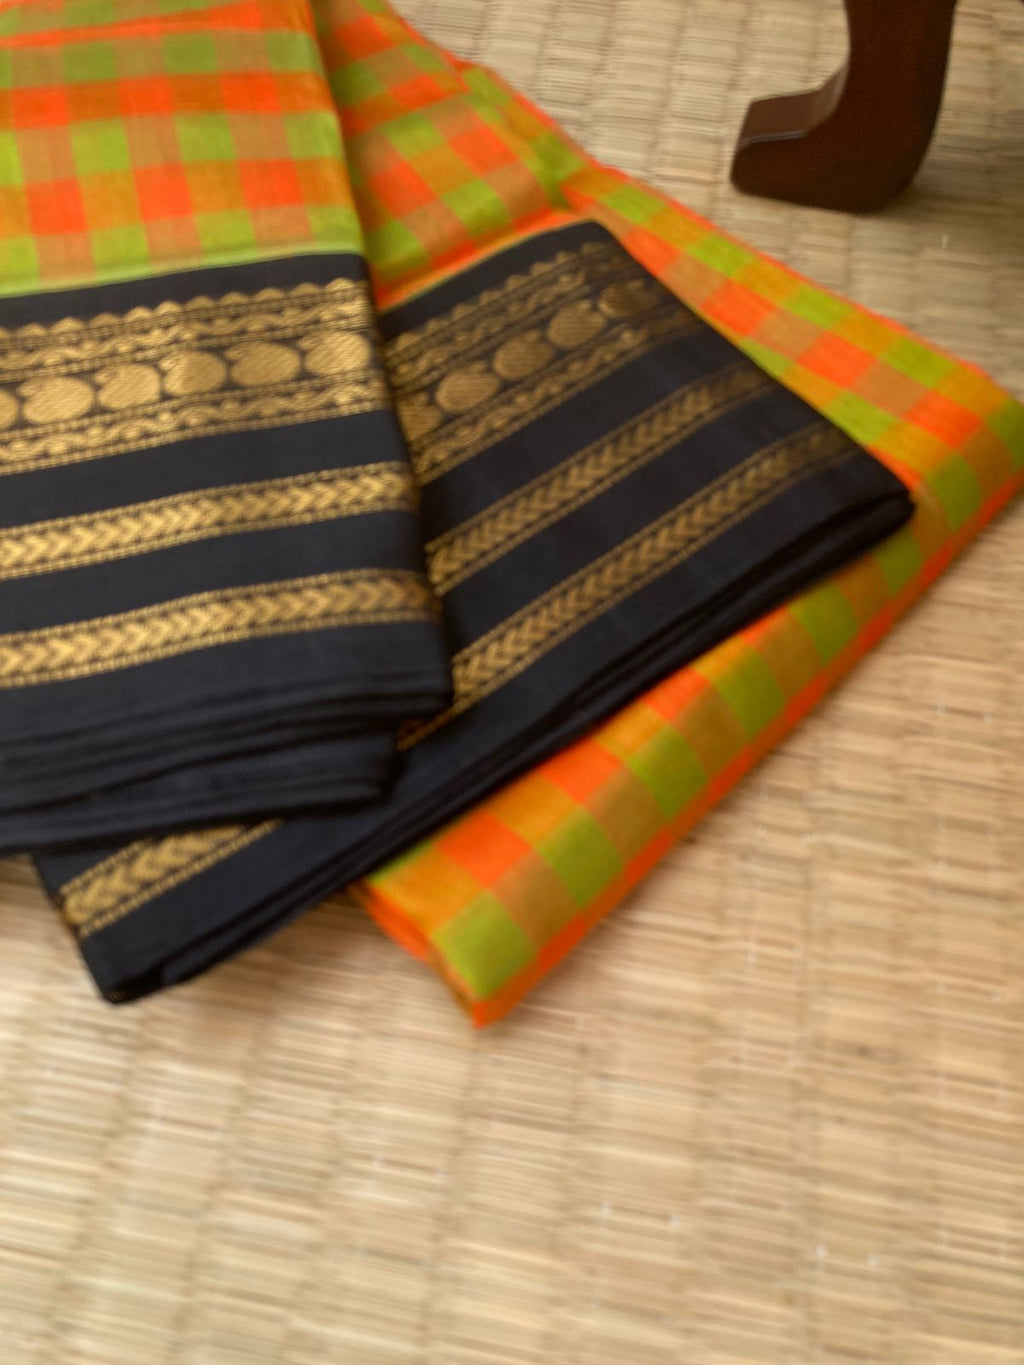 Paalum Palamum Kattams Korvai Silk Cottons - olive and orange with black borders